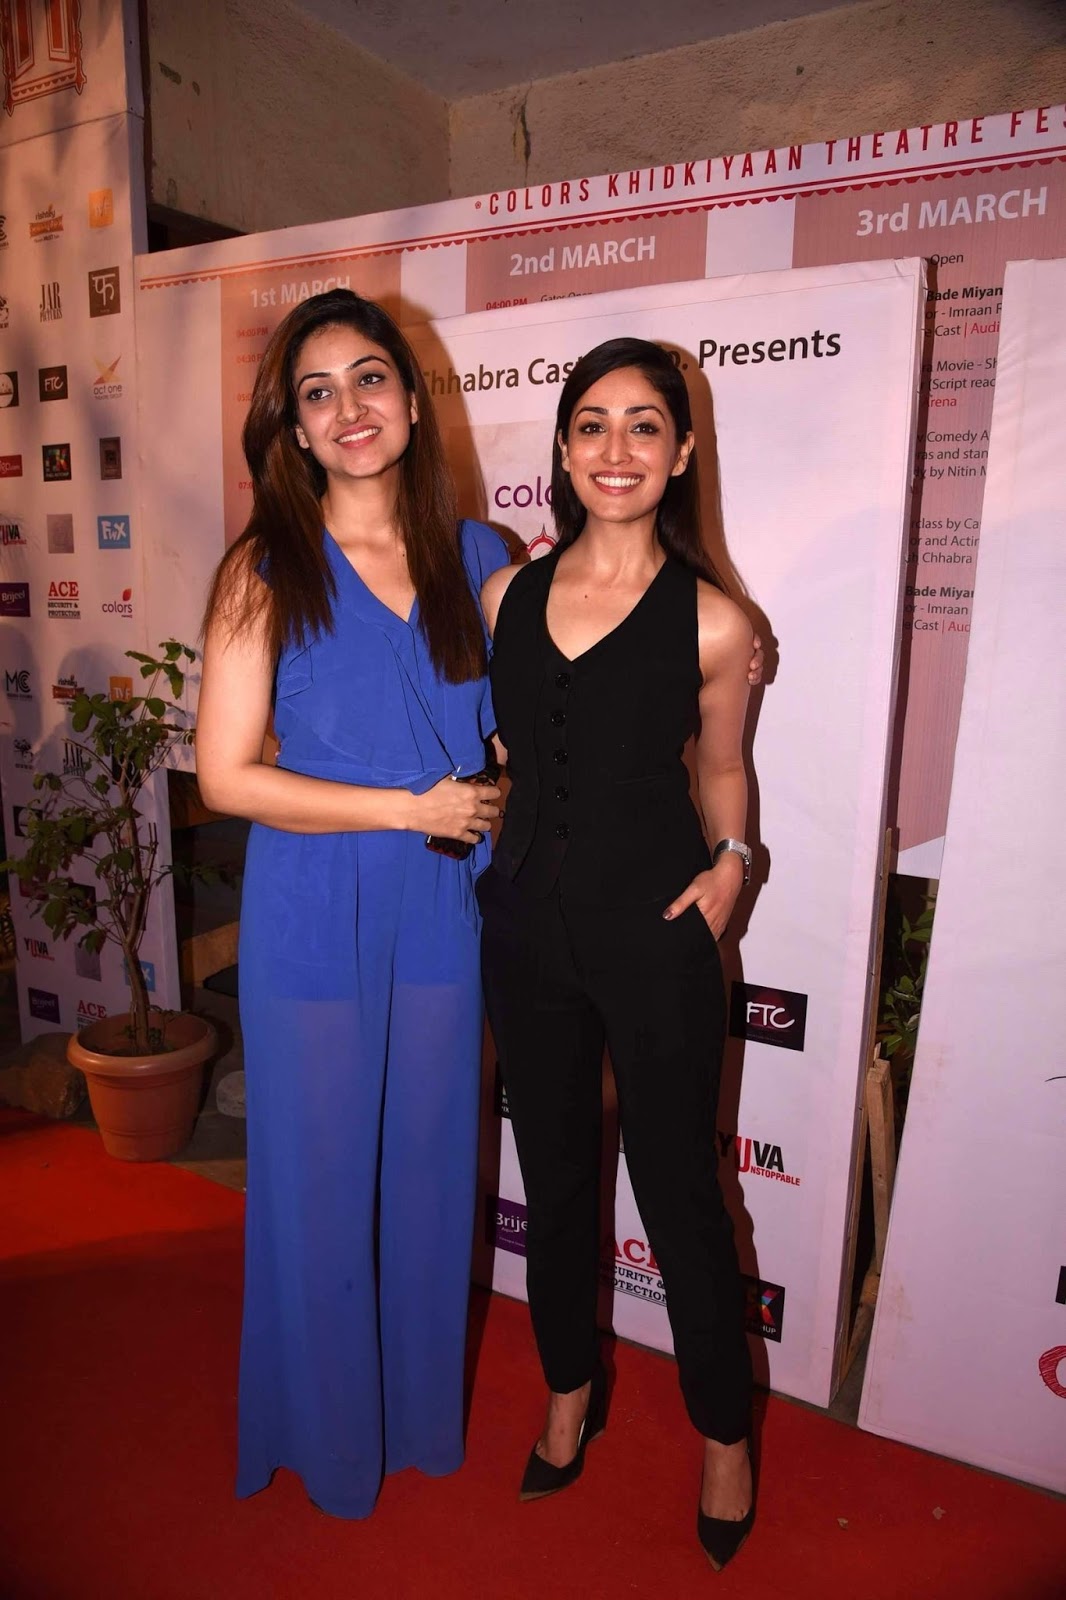 Dia Mirza and Yami Gautam Look Super Hot At COLORS Khidkiyaan Theatre Festival 2017 in Mumbai